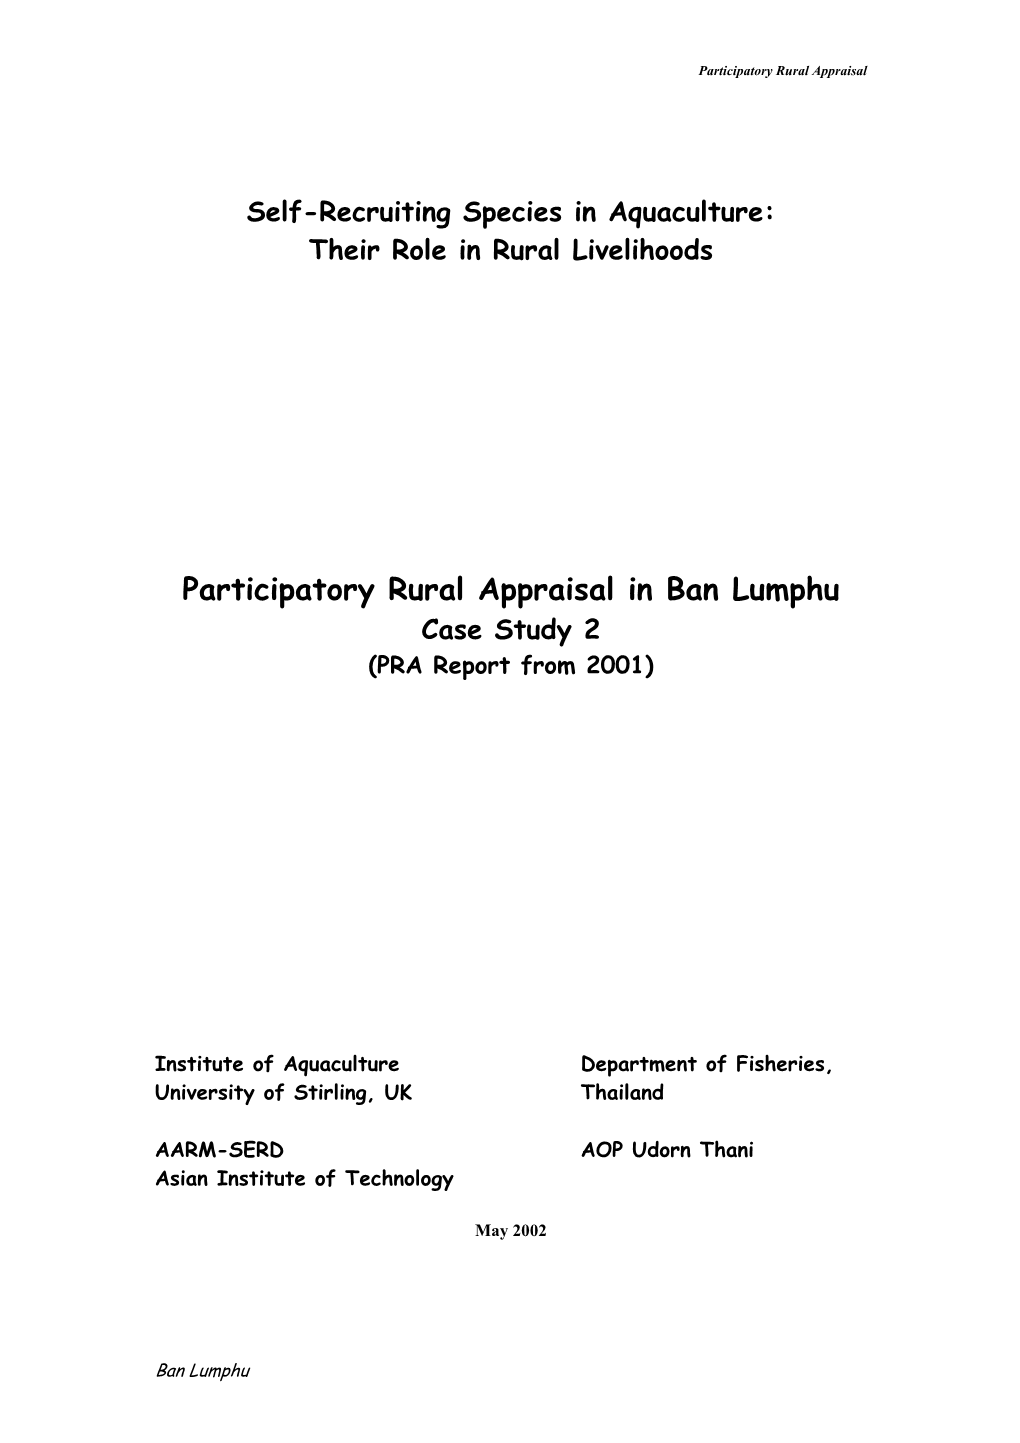 Participatory Rural Appraisal in Ban Lumphu Case Study 2 (PRA Report from 2001)